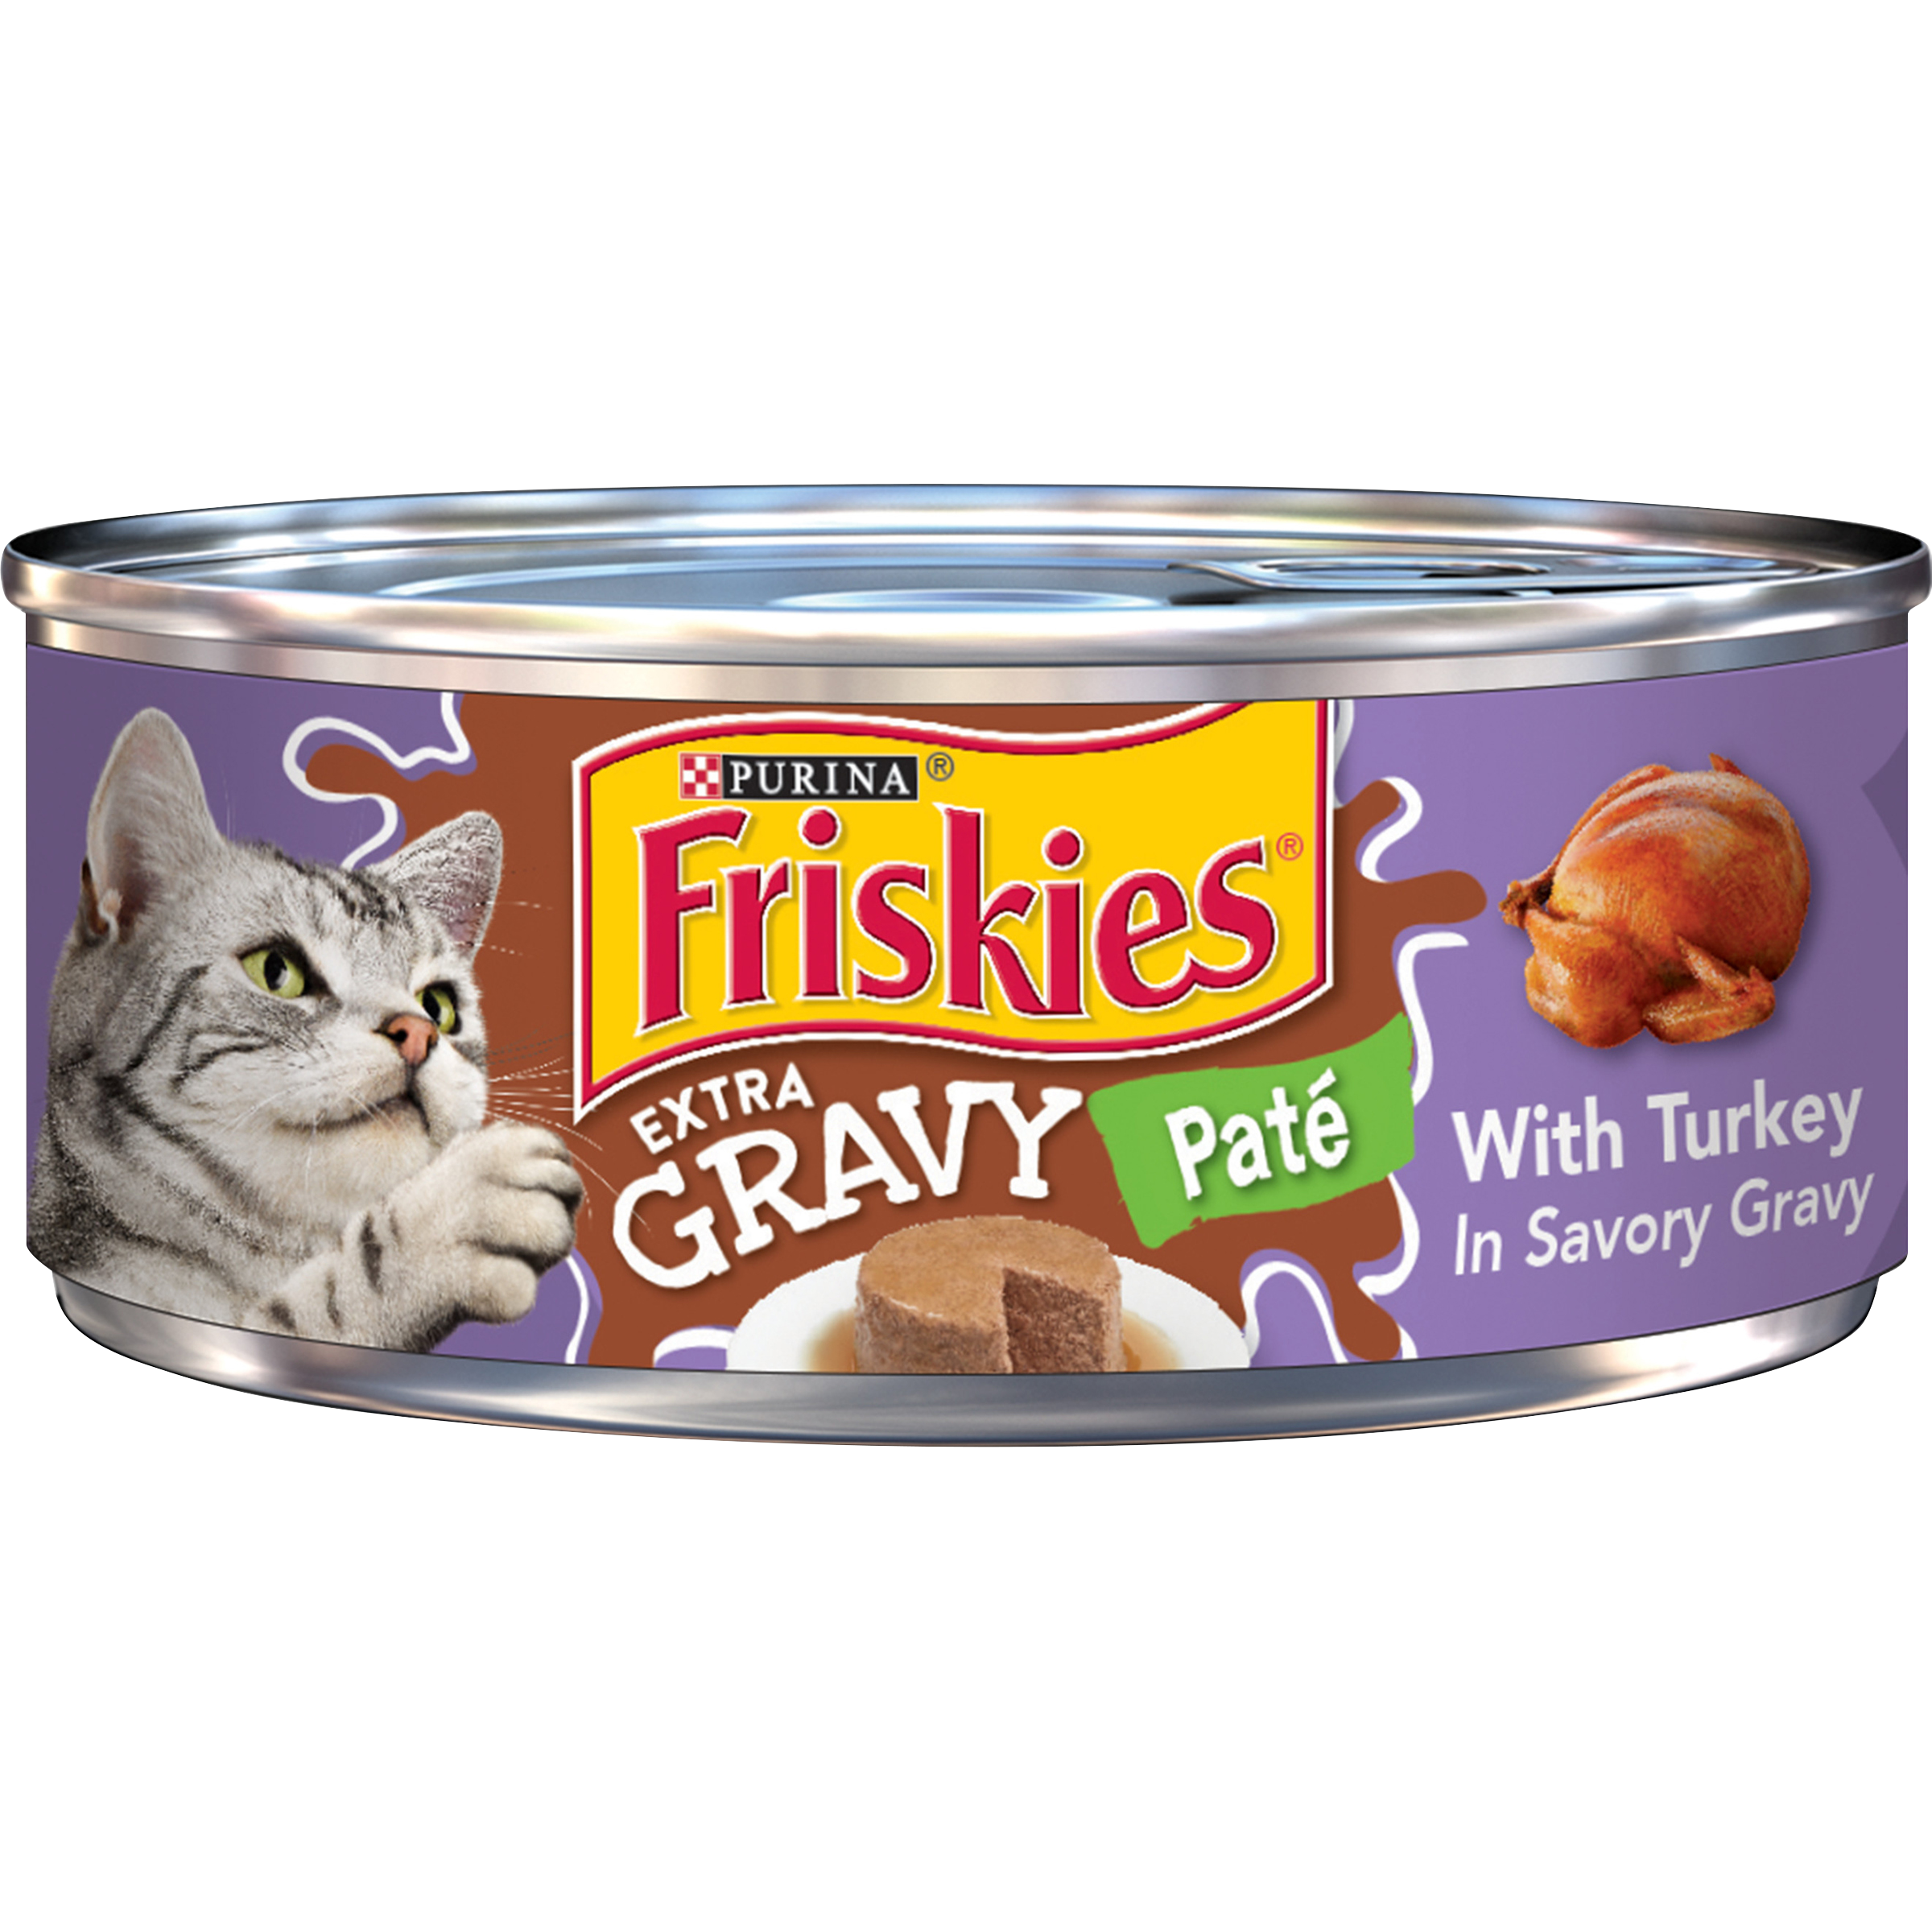 Friskies Gravy Pate Wet Cat Food, Extra Gravy Pate With Turkey in ...